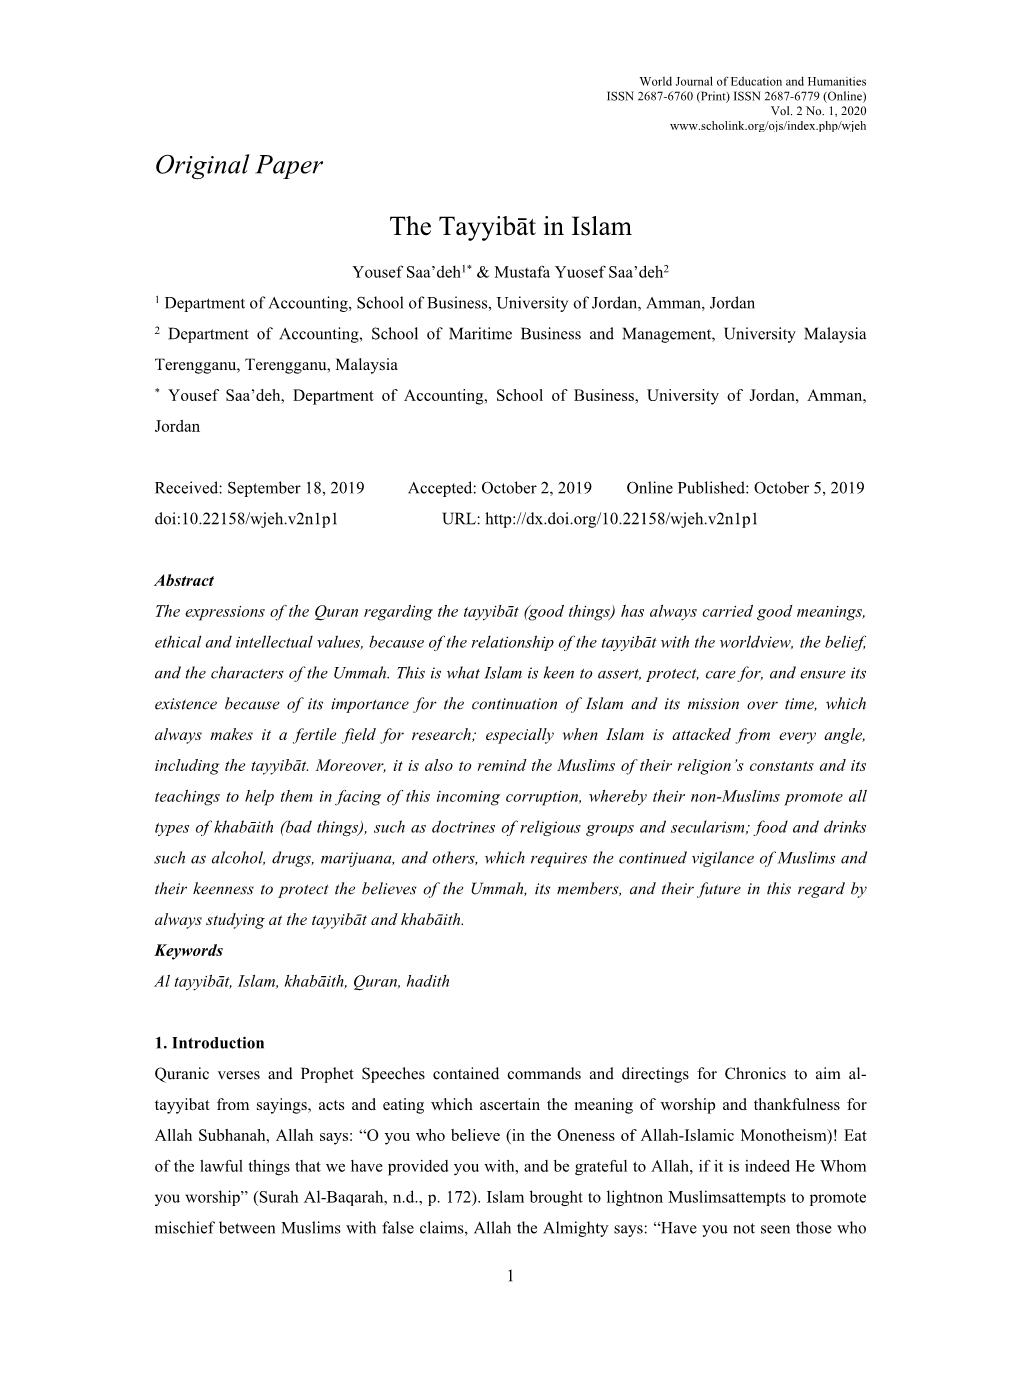 Original Paper the Tayyibāt in Islam